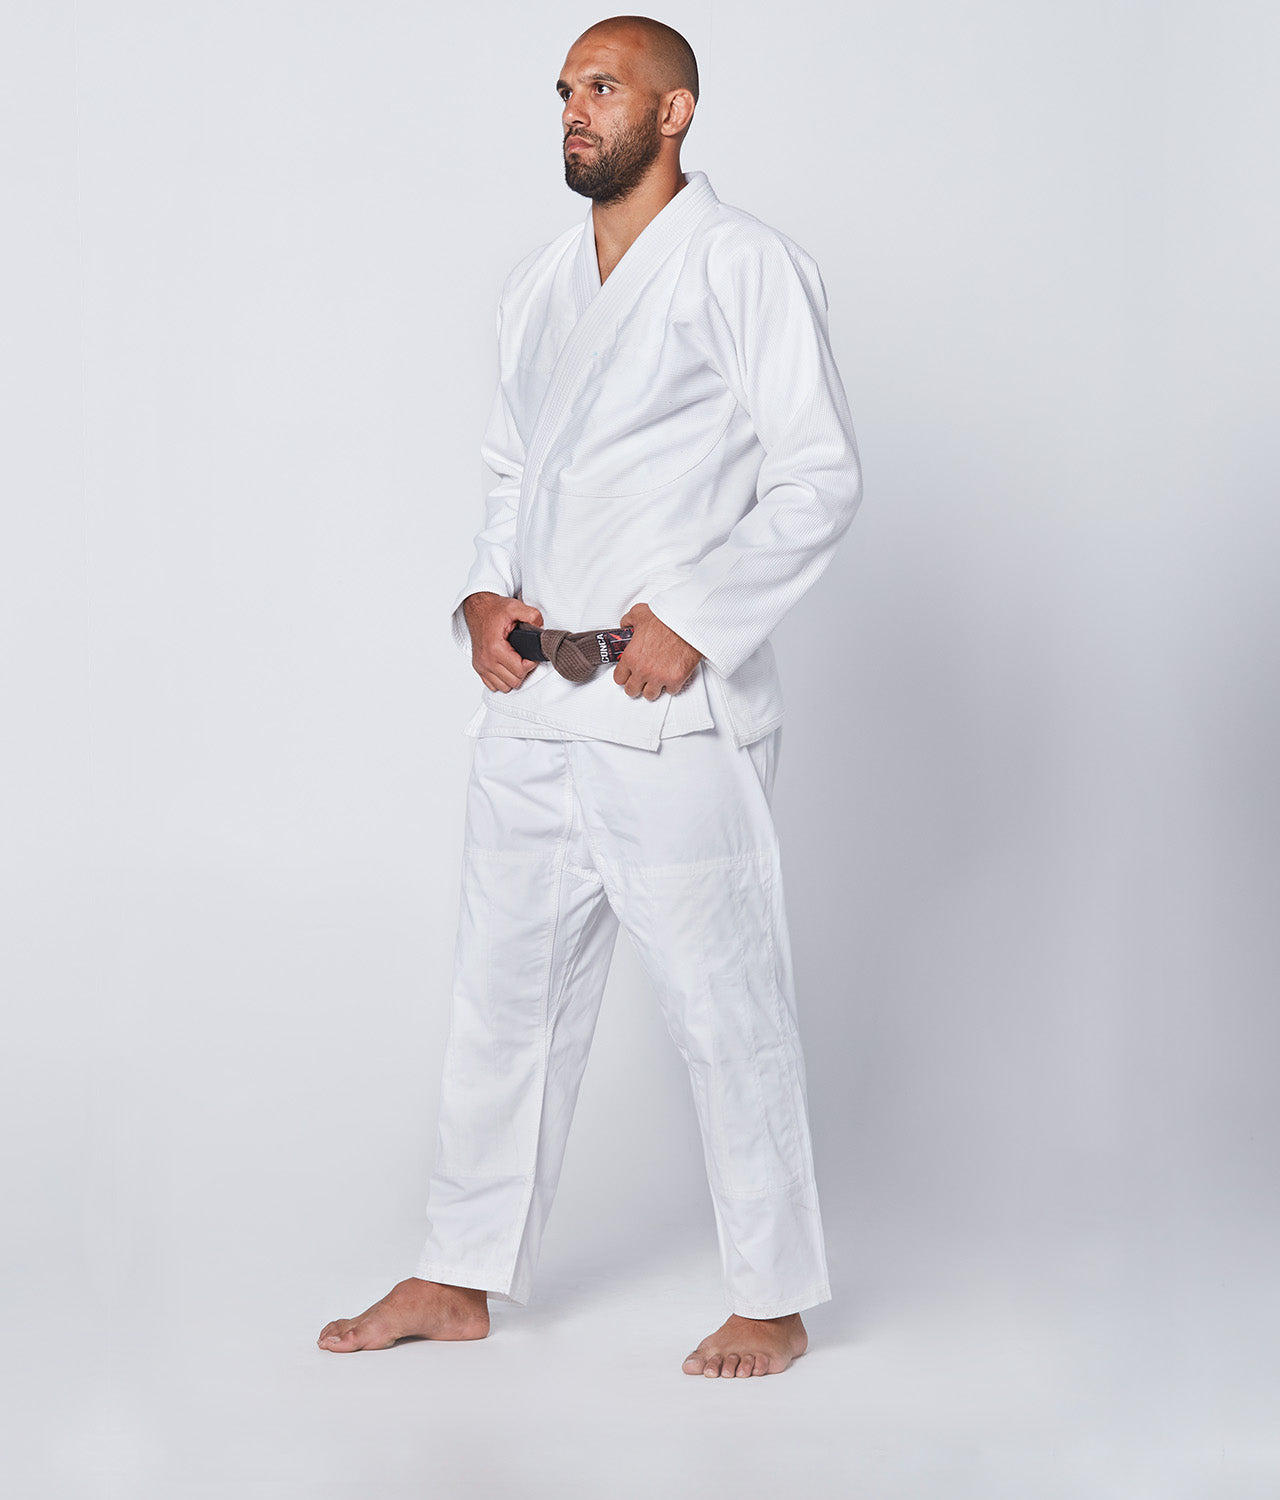 Men's Essential White Brazilian Jiu Jitsu BJJ Gi